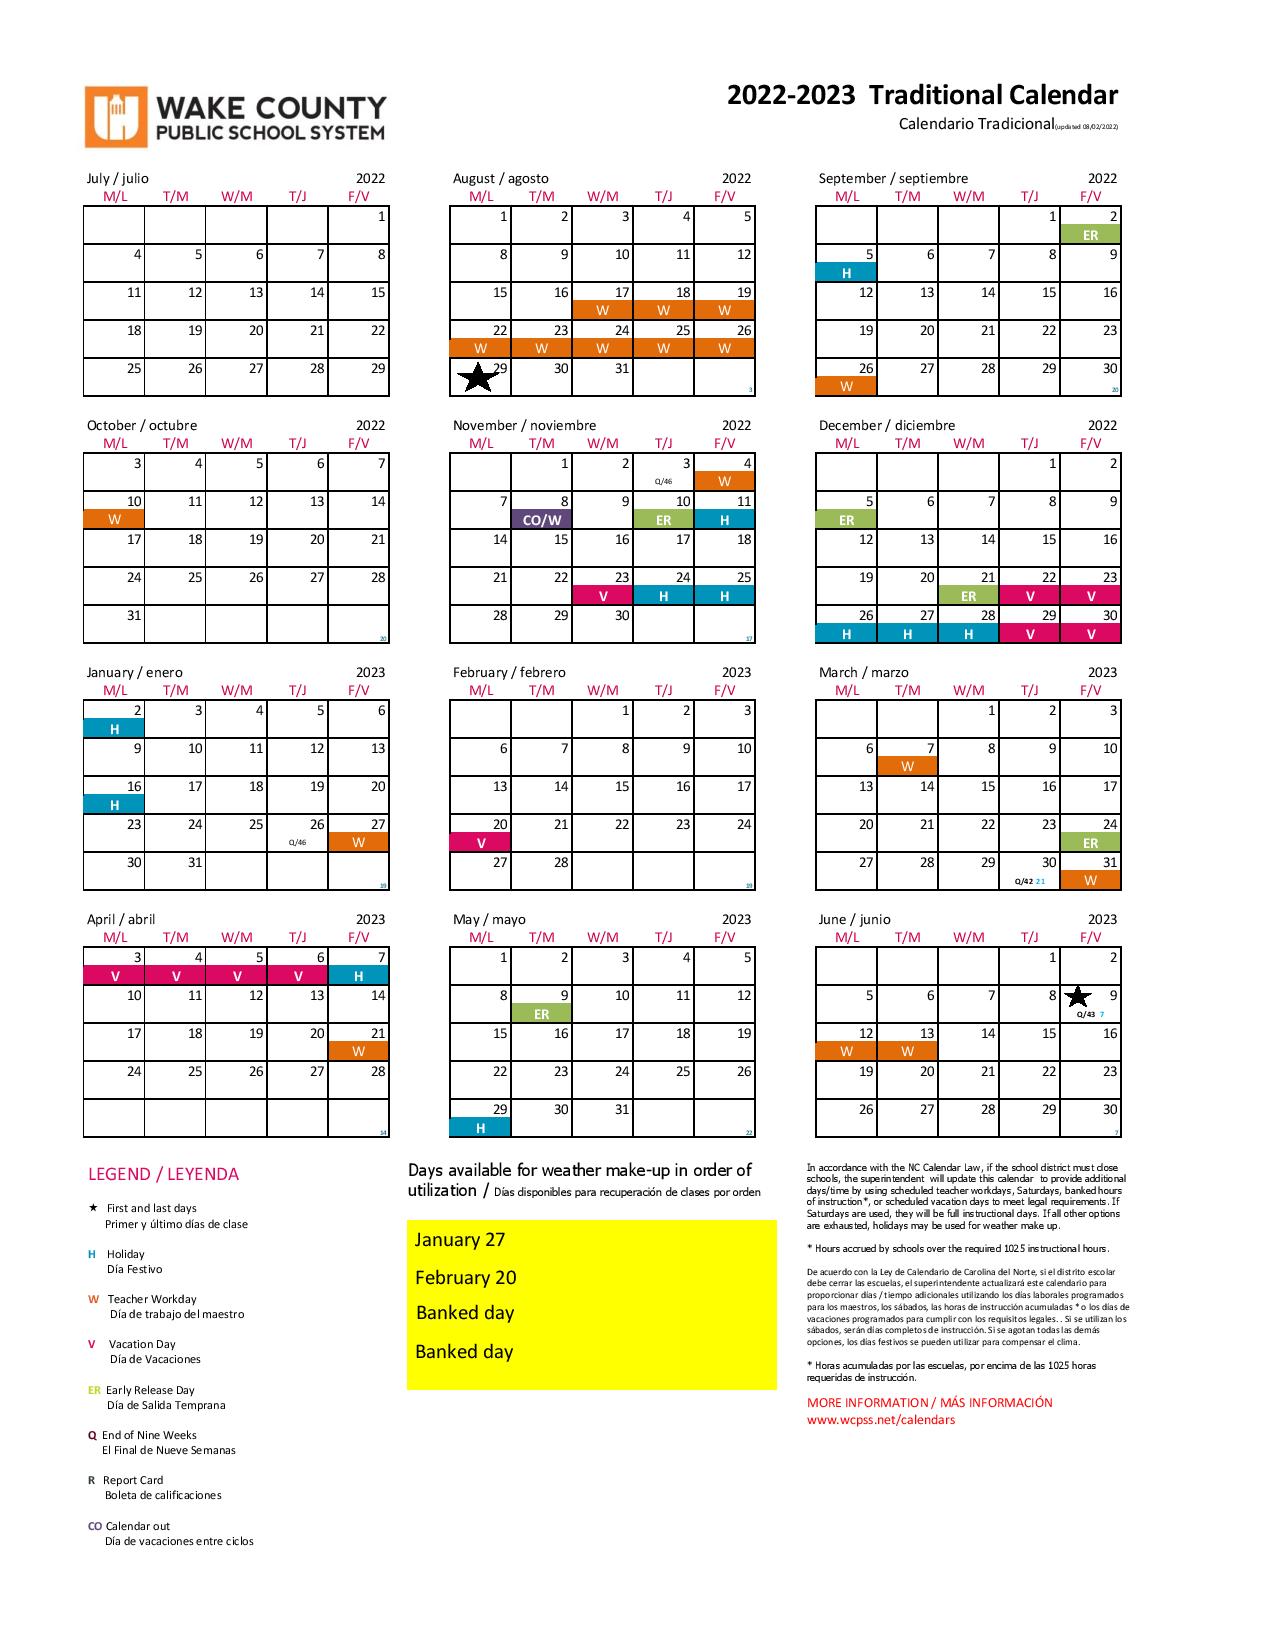 Wake County Schools 2023 Calendar Get Calendar 2023 Update